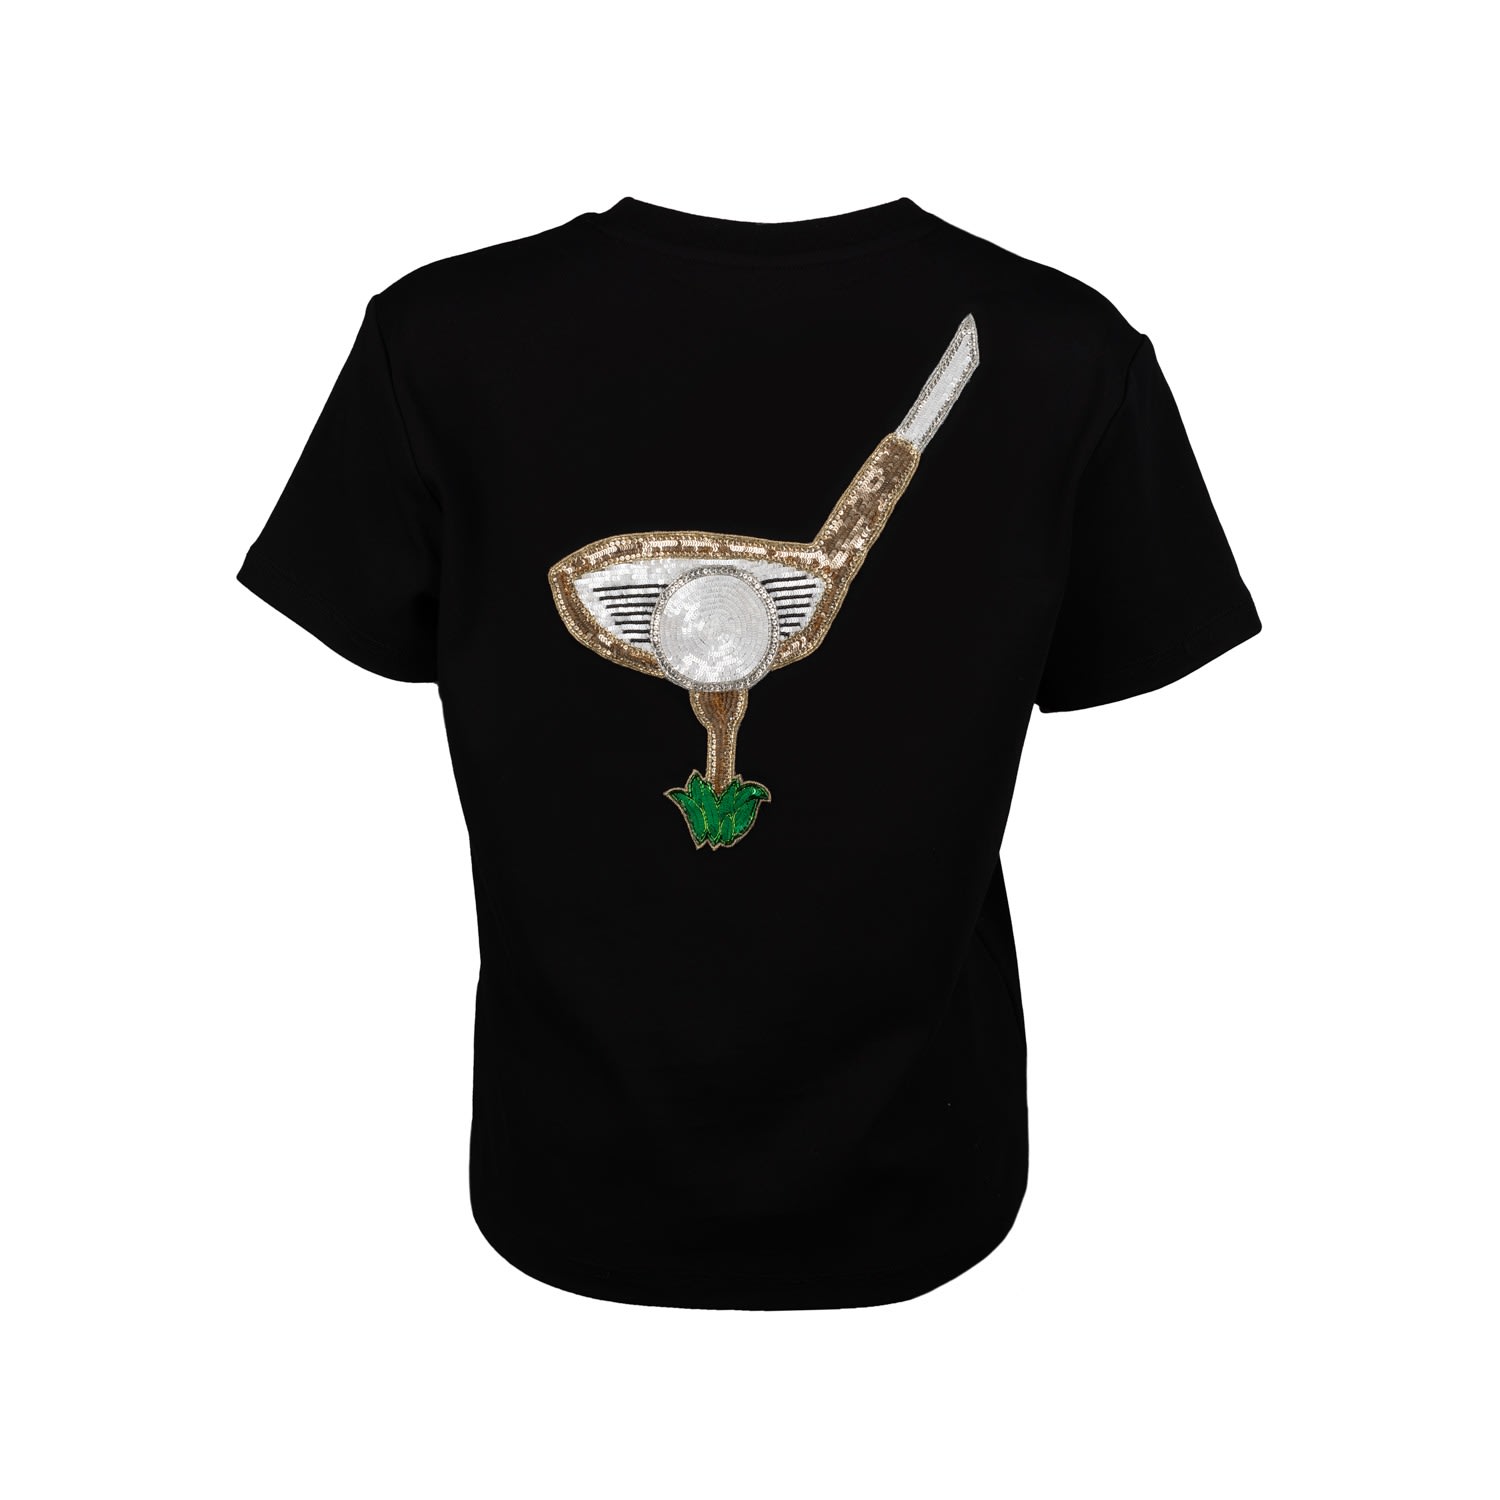 Laines London Women's Embellished Golf T-shirt - Black